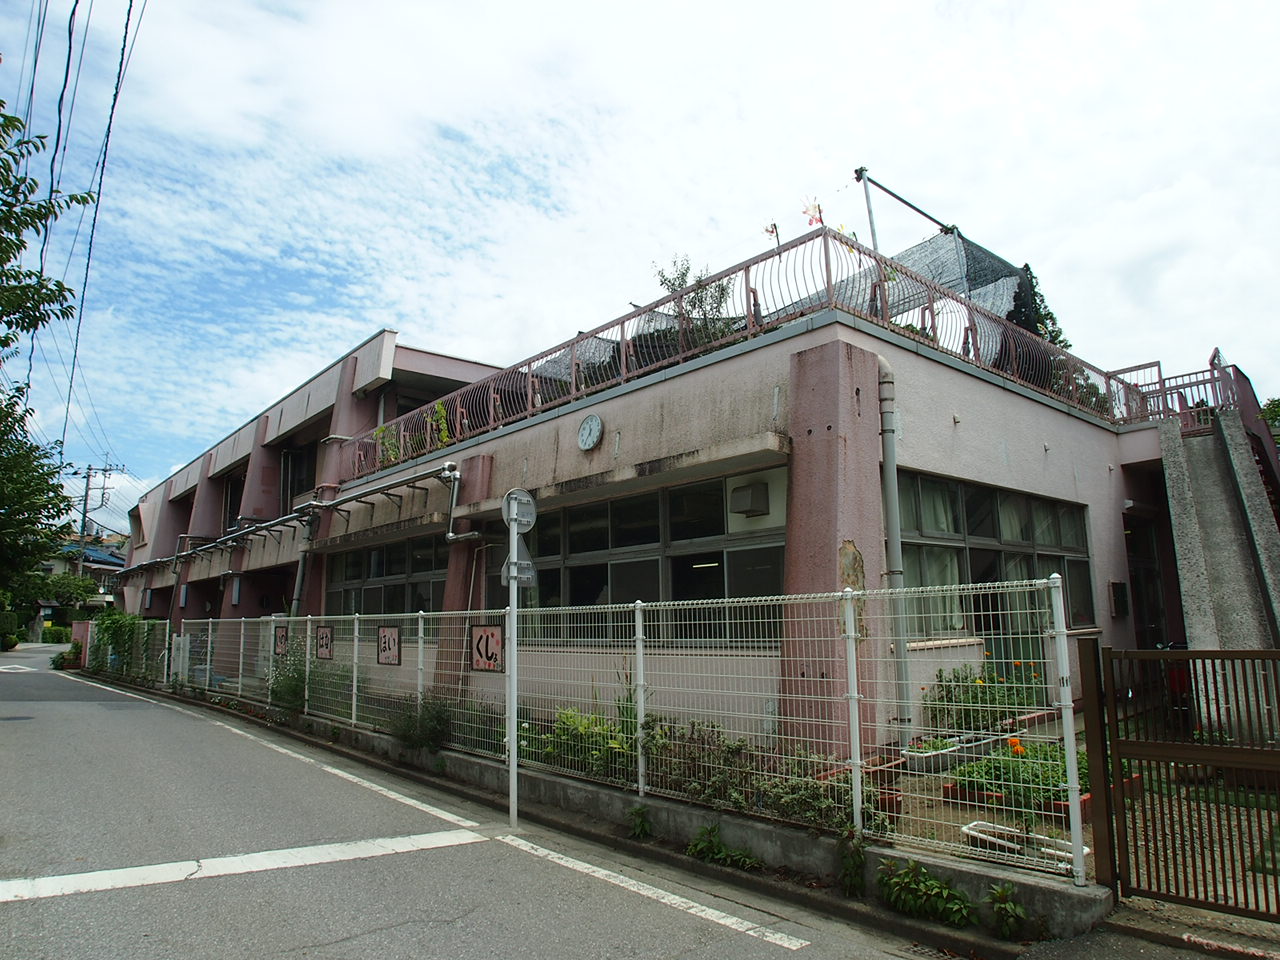 kindergarten ・ Nursery. Inohana nursery school (kindergarten ・ 418m to the nursery)